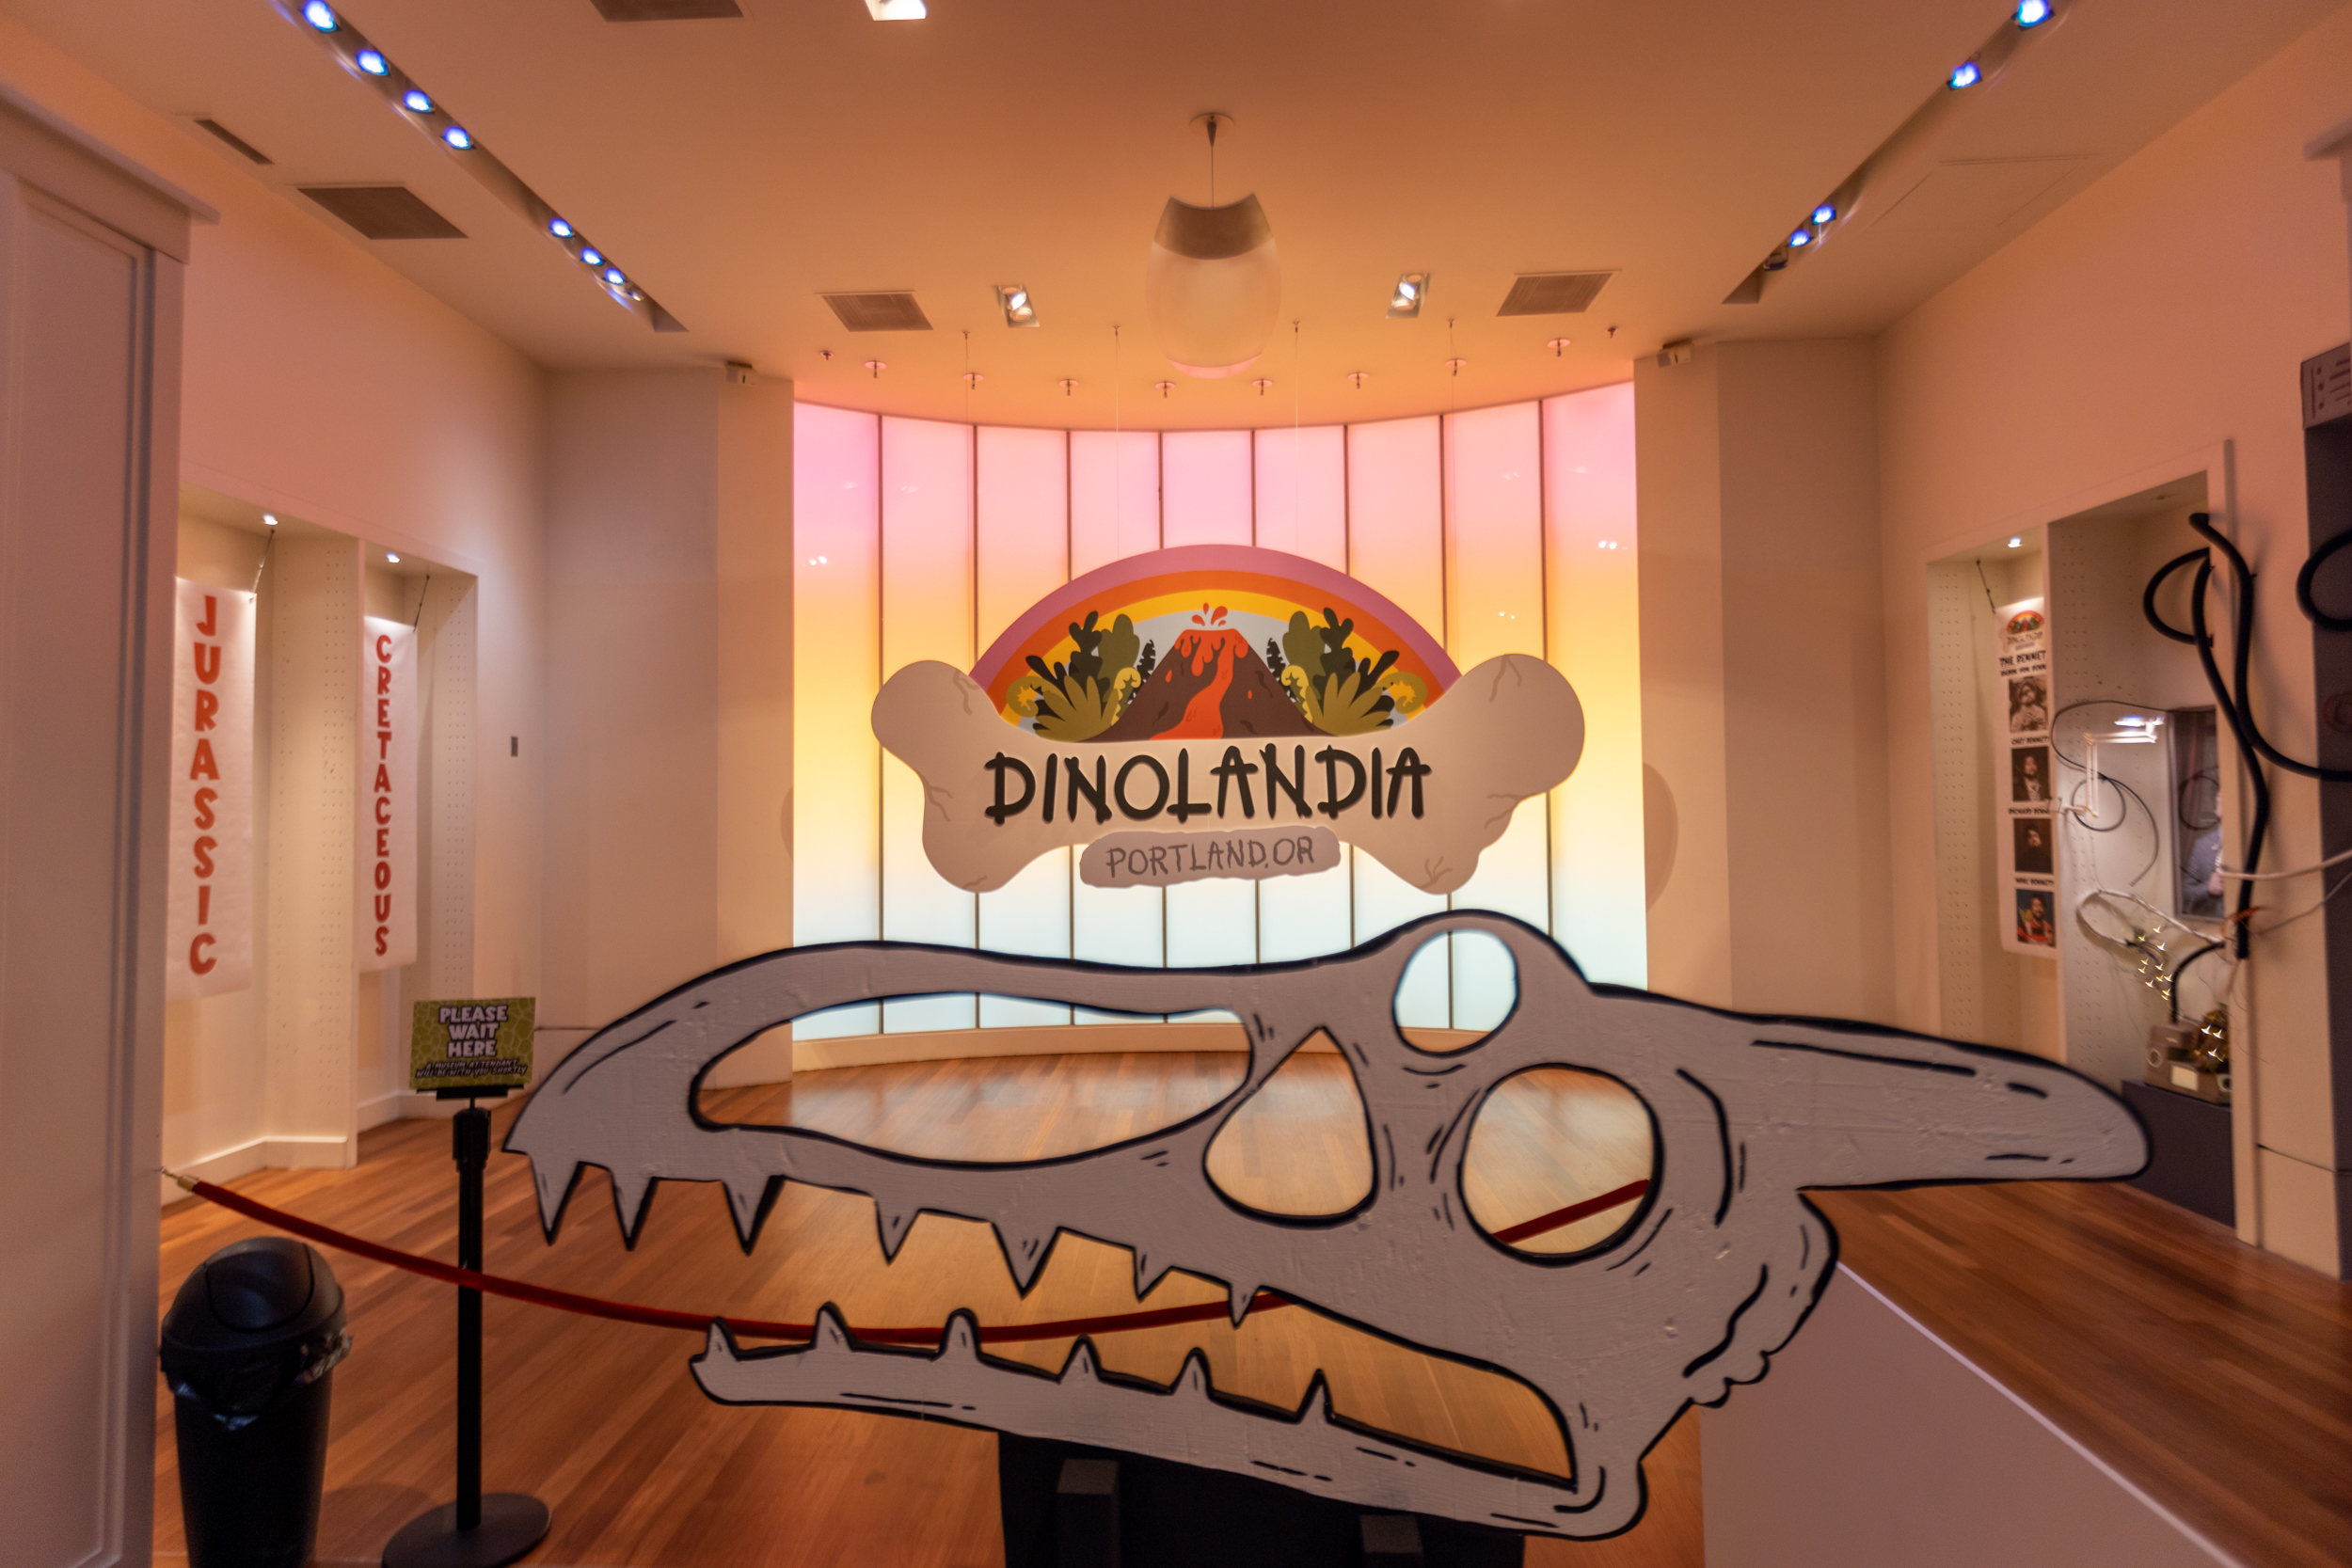 Dinolandia from Portland artist Mike Bennett 